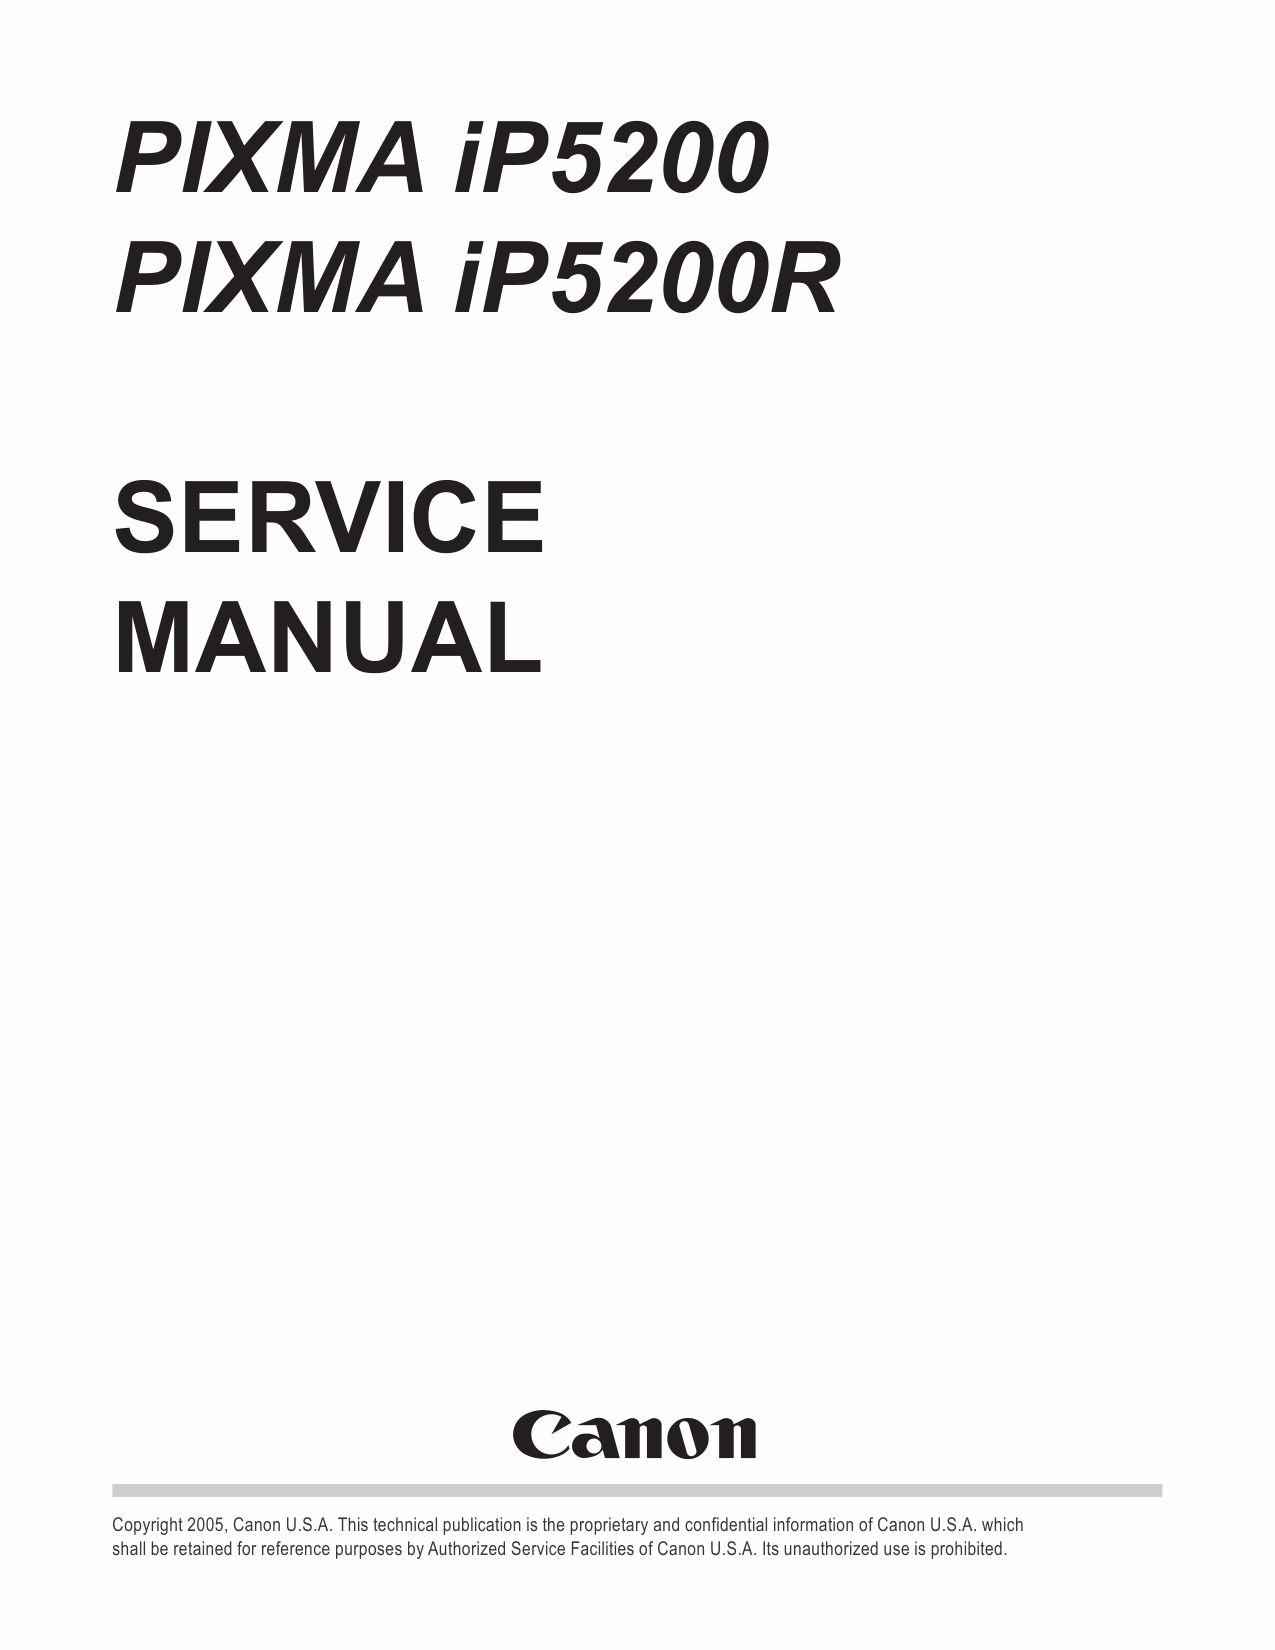 Canon PIXMA iP5200 iP5200R Service Manual-1